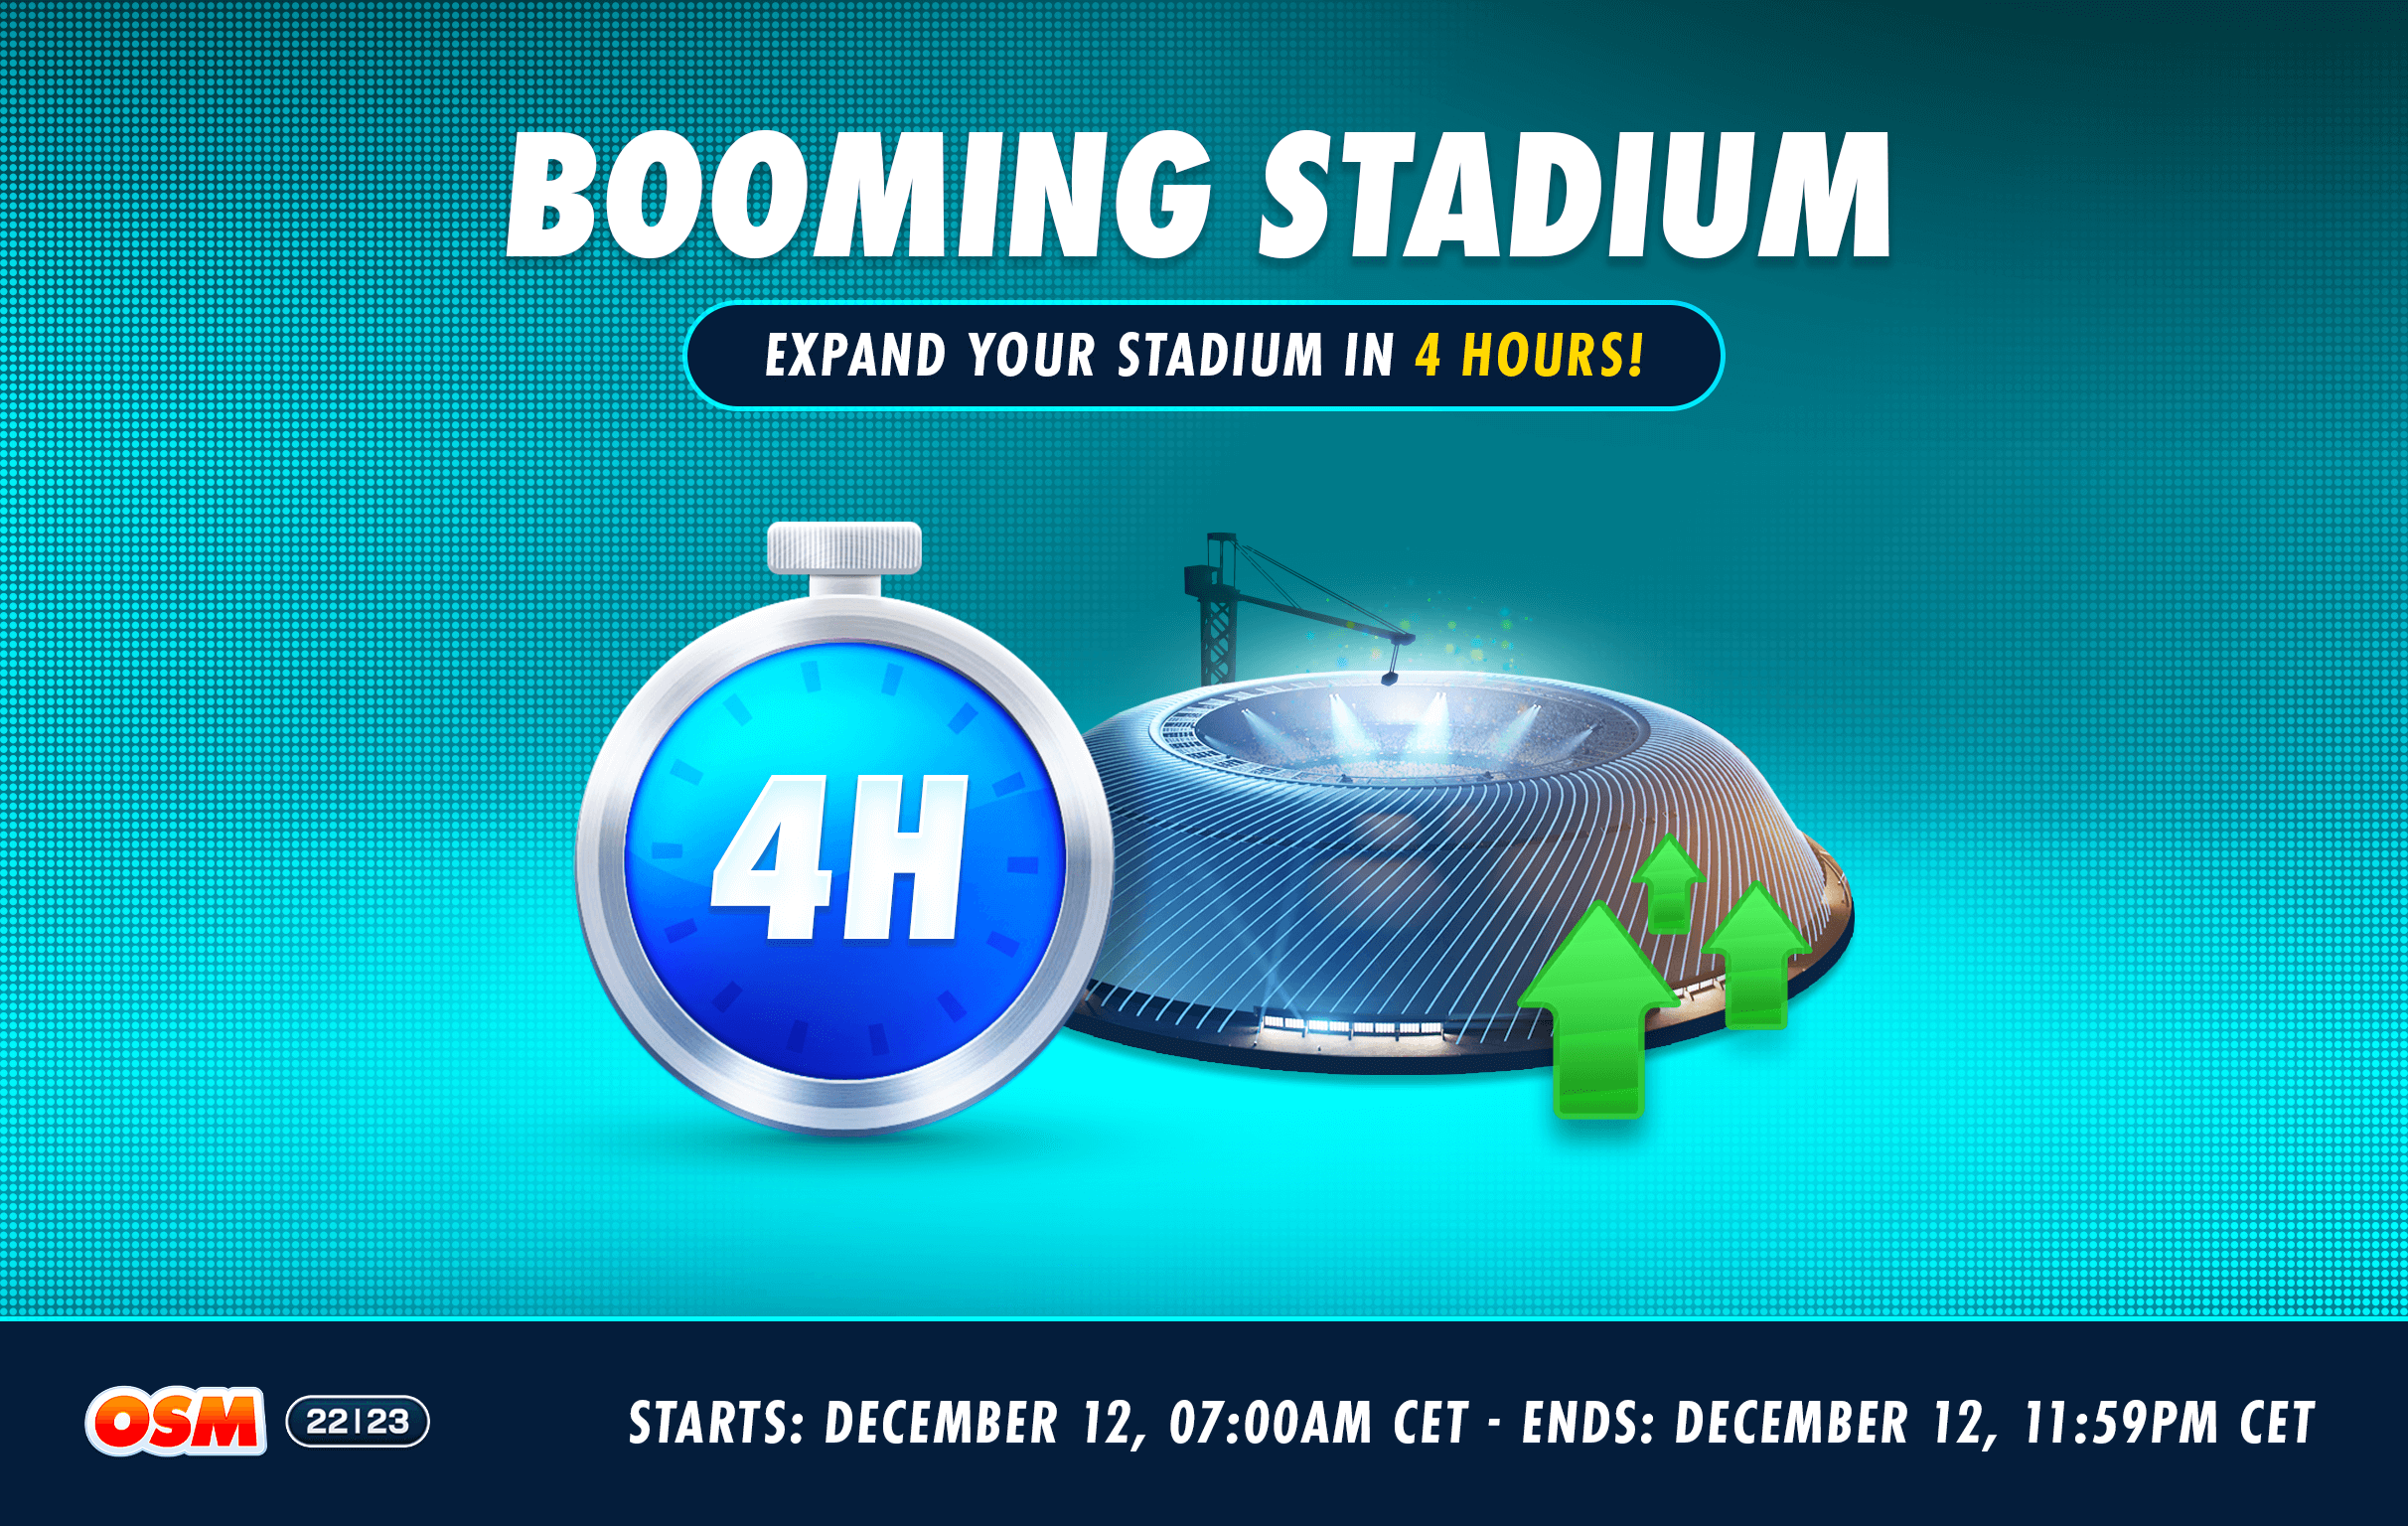 Forum_Booming Stadium_REDDIT.png